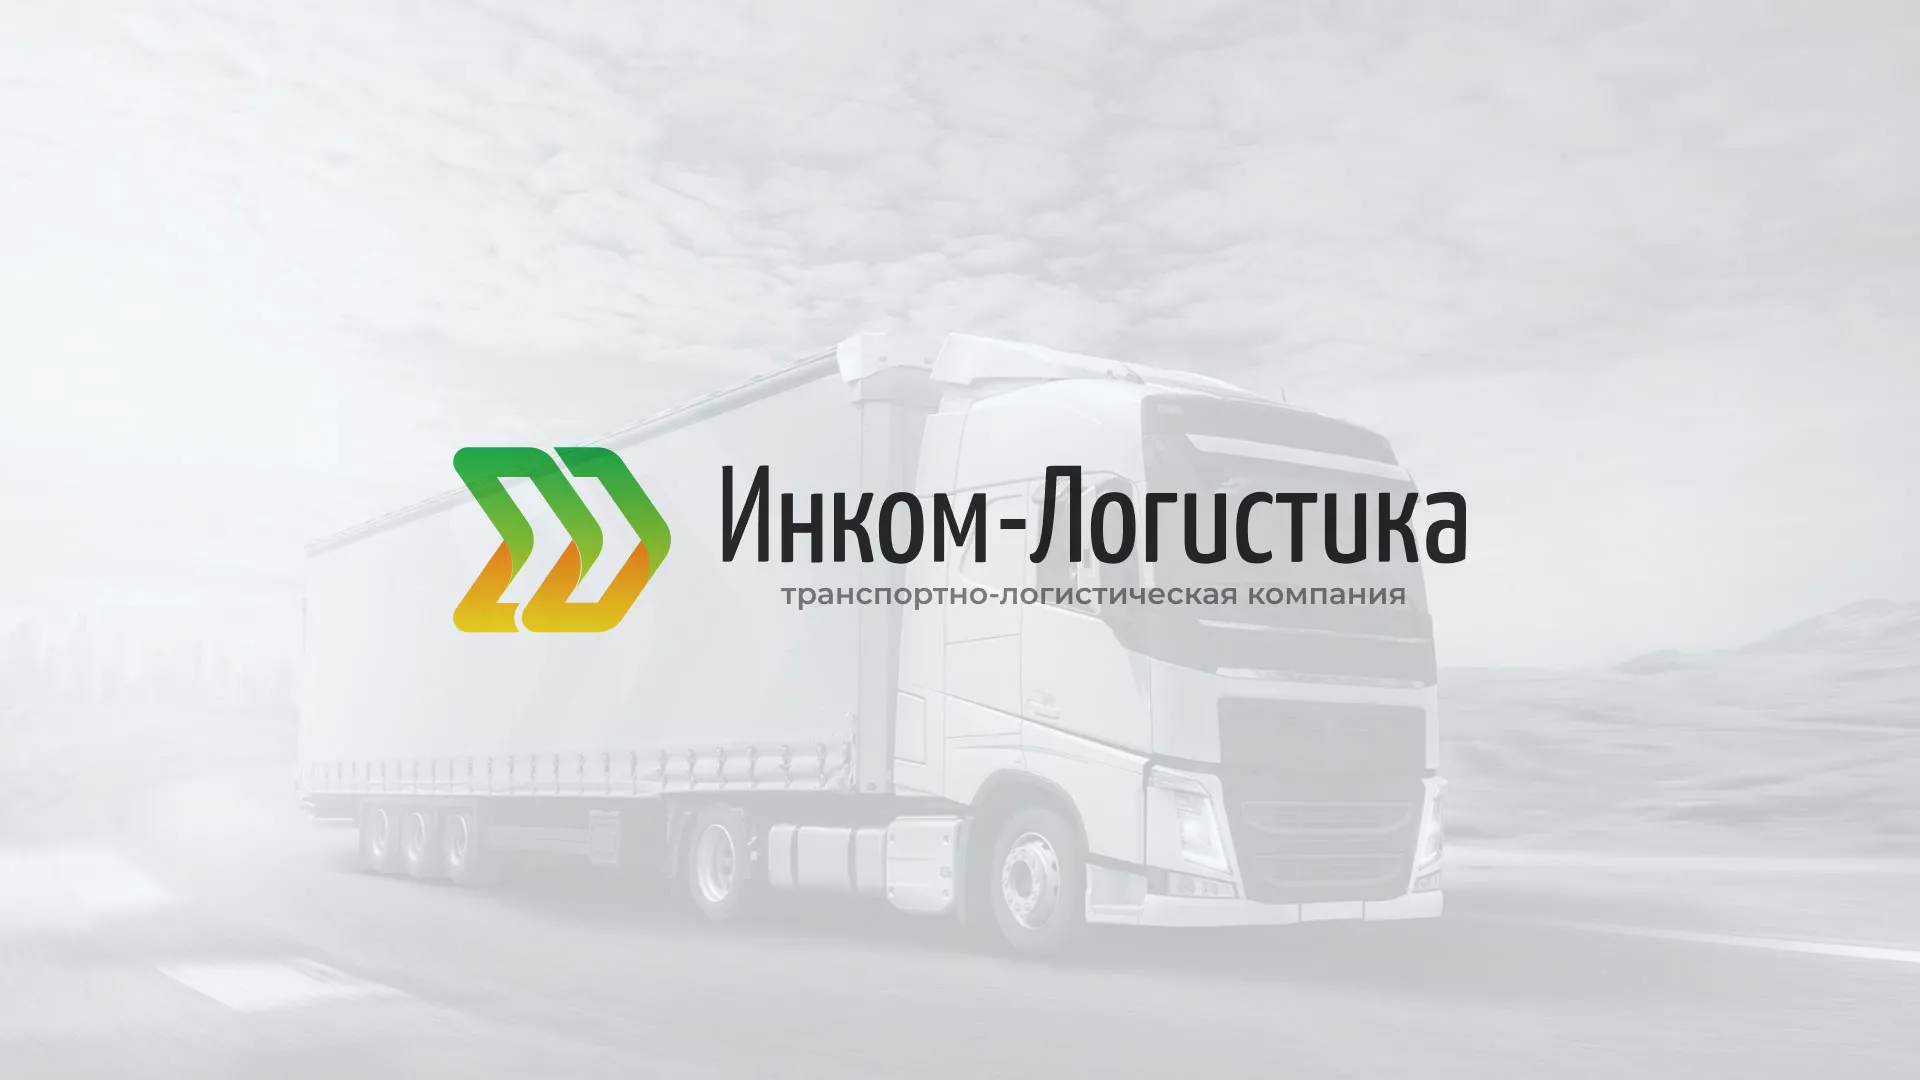 Разработка логотипа и сайта компании «Инком-Логистика» в Донецке